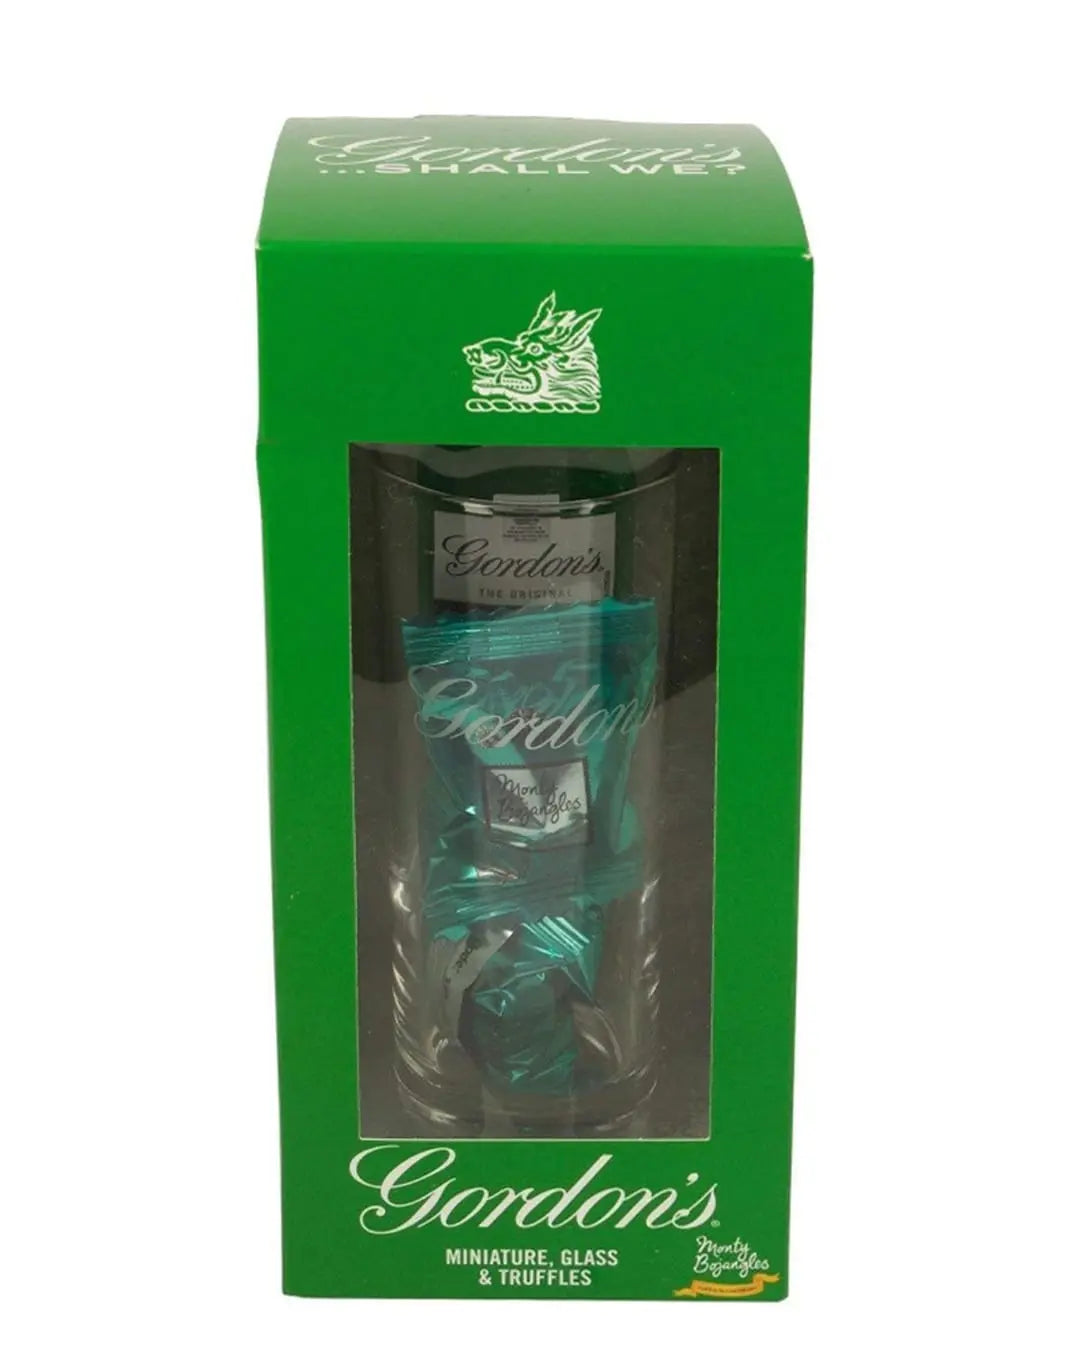 Gordon's London Dry Gin Miniature Glass + Toffees Gift Set, 50 cl Spirit Miniatures 5038635066677